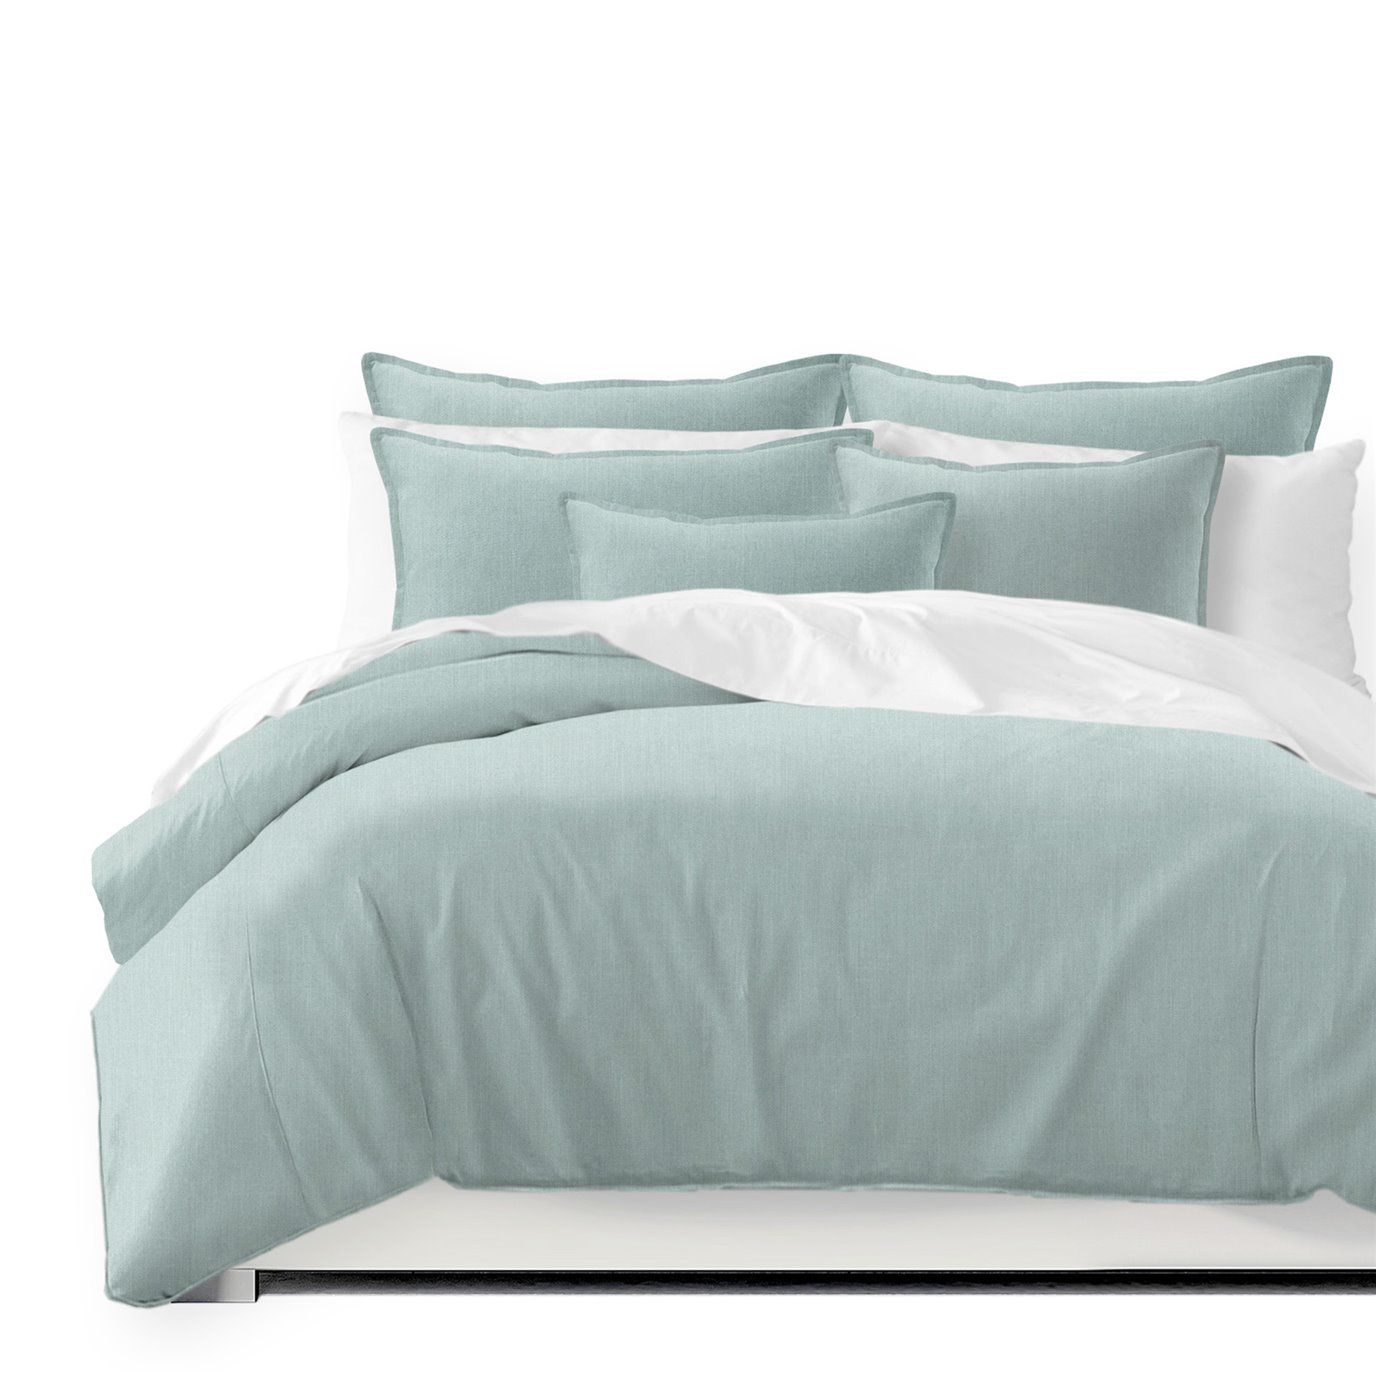 Sutton Aqua Mist Comforter and Pillow Sham(s) Set - Size Full